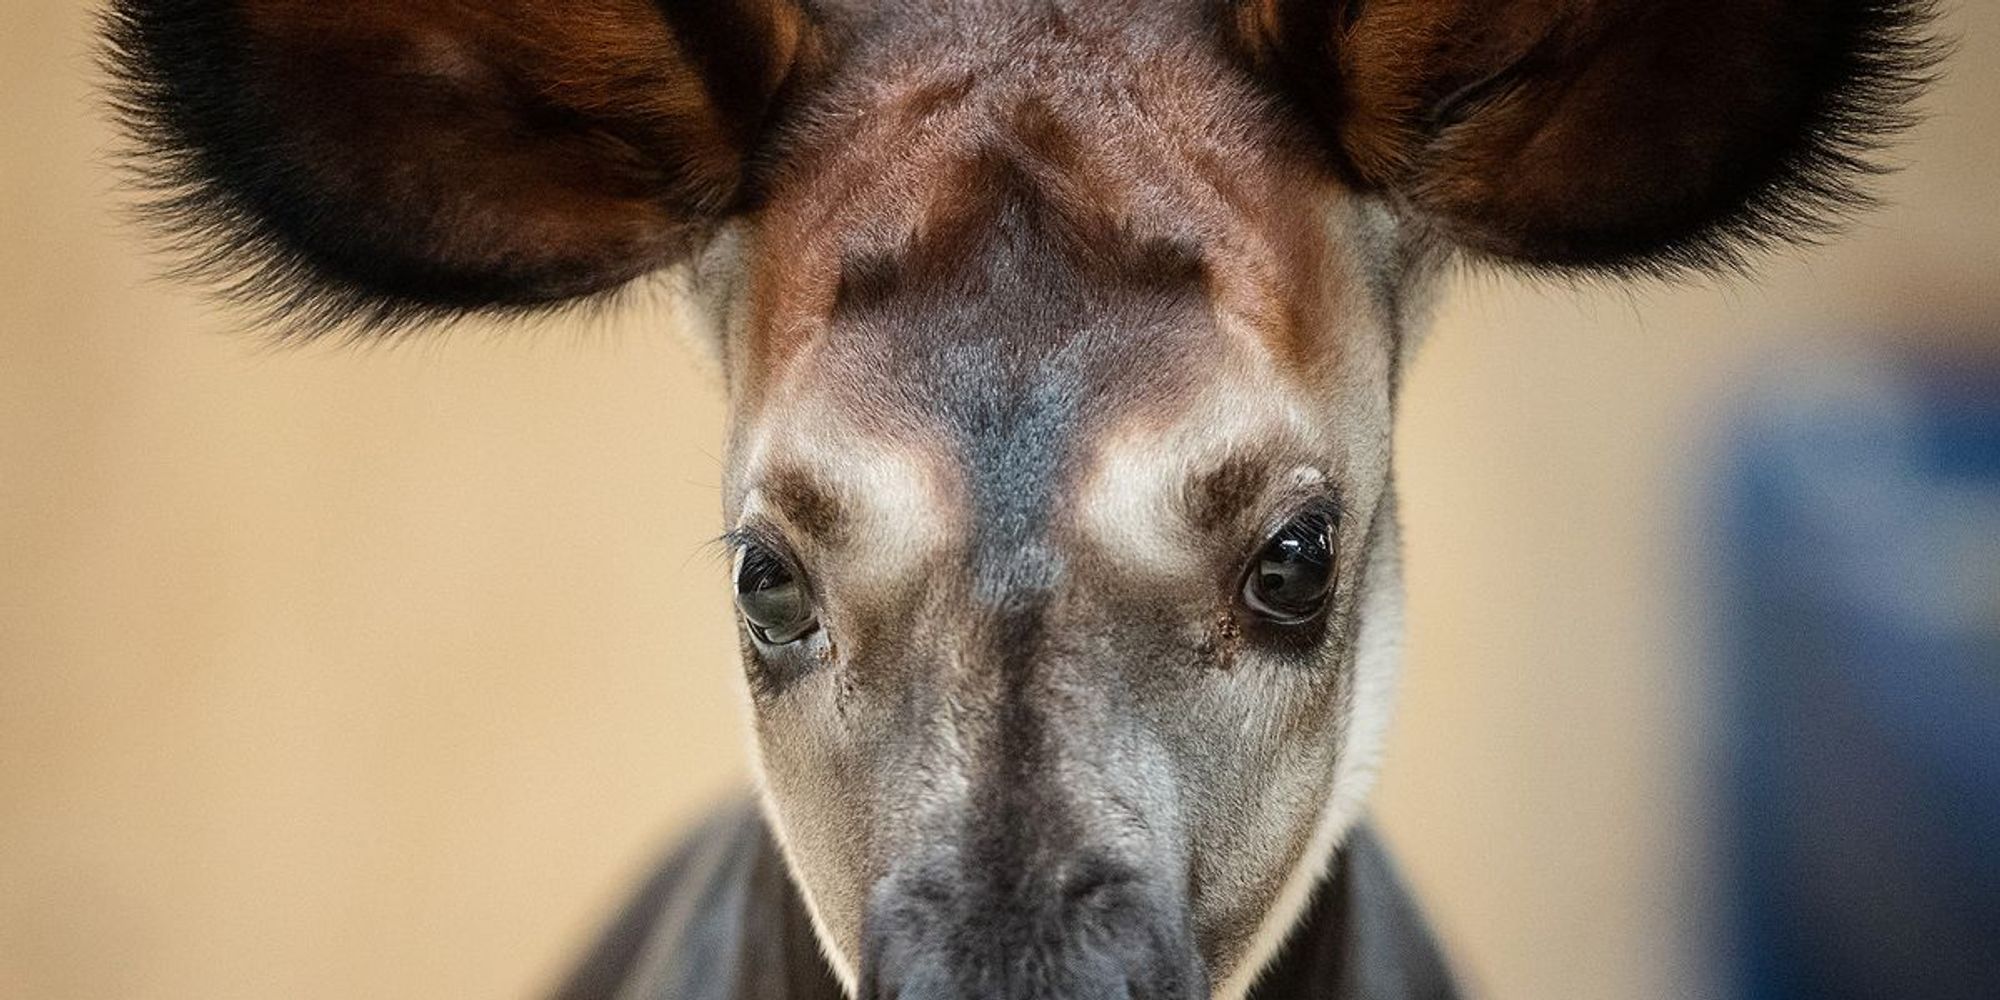 Dublin Zoo announces the birth of an endangered okapi calf